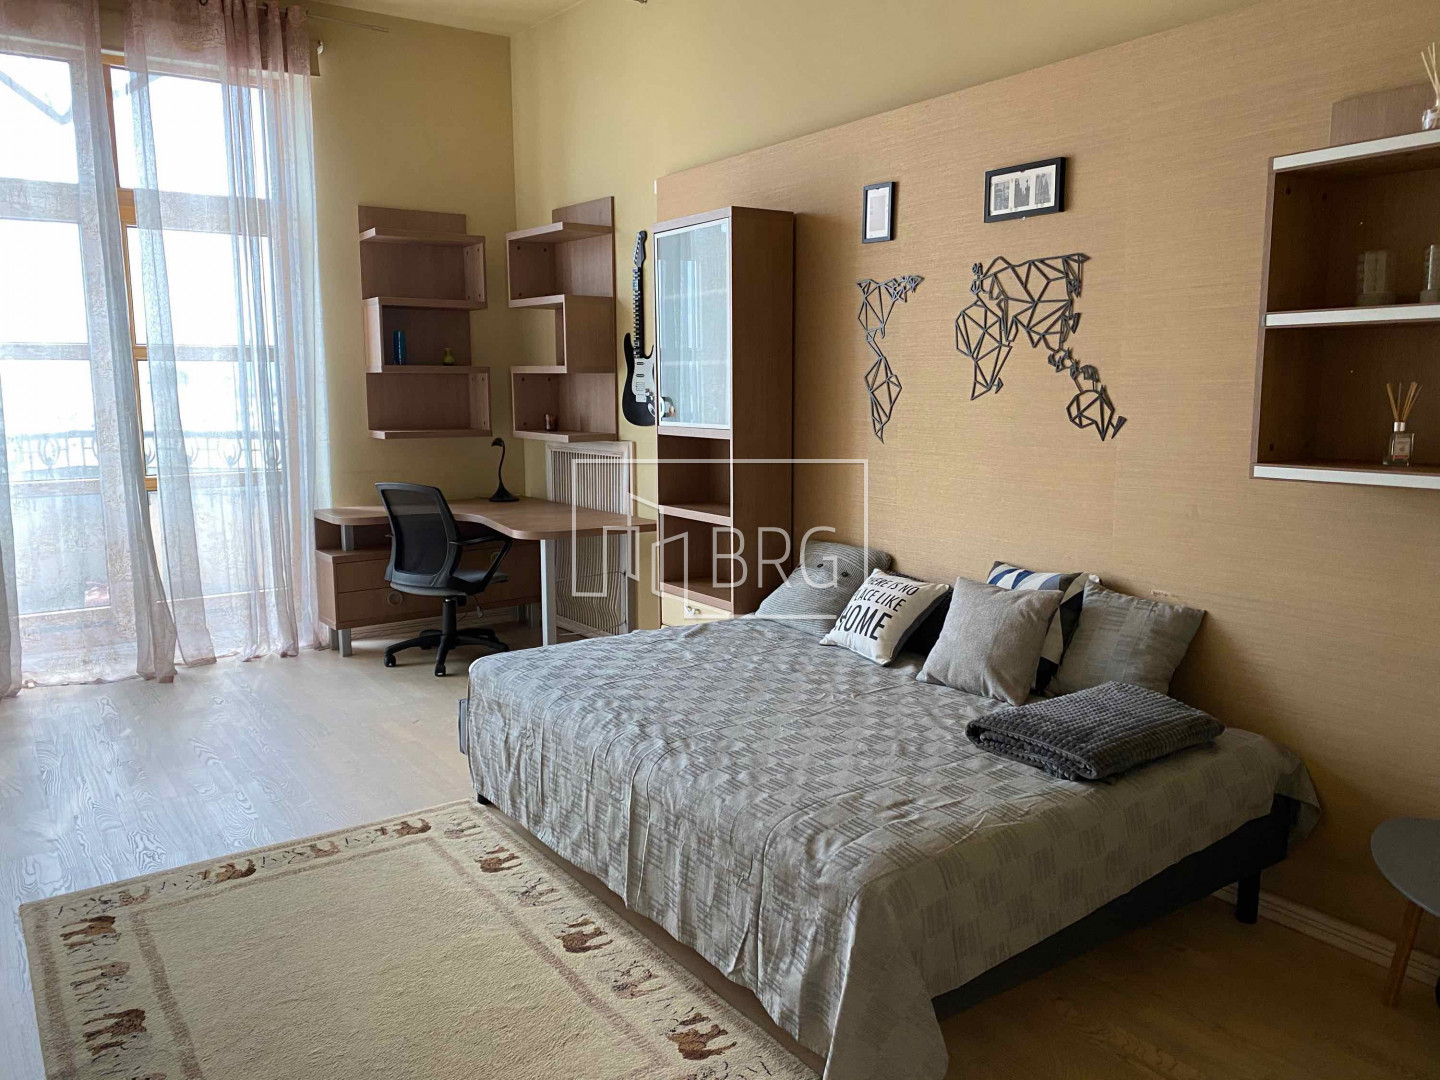 Аренда квартиры 4 комнаты с видом на город Печерск центр. Киев